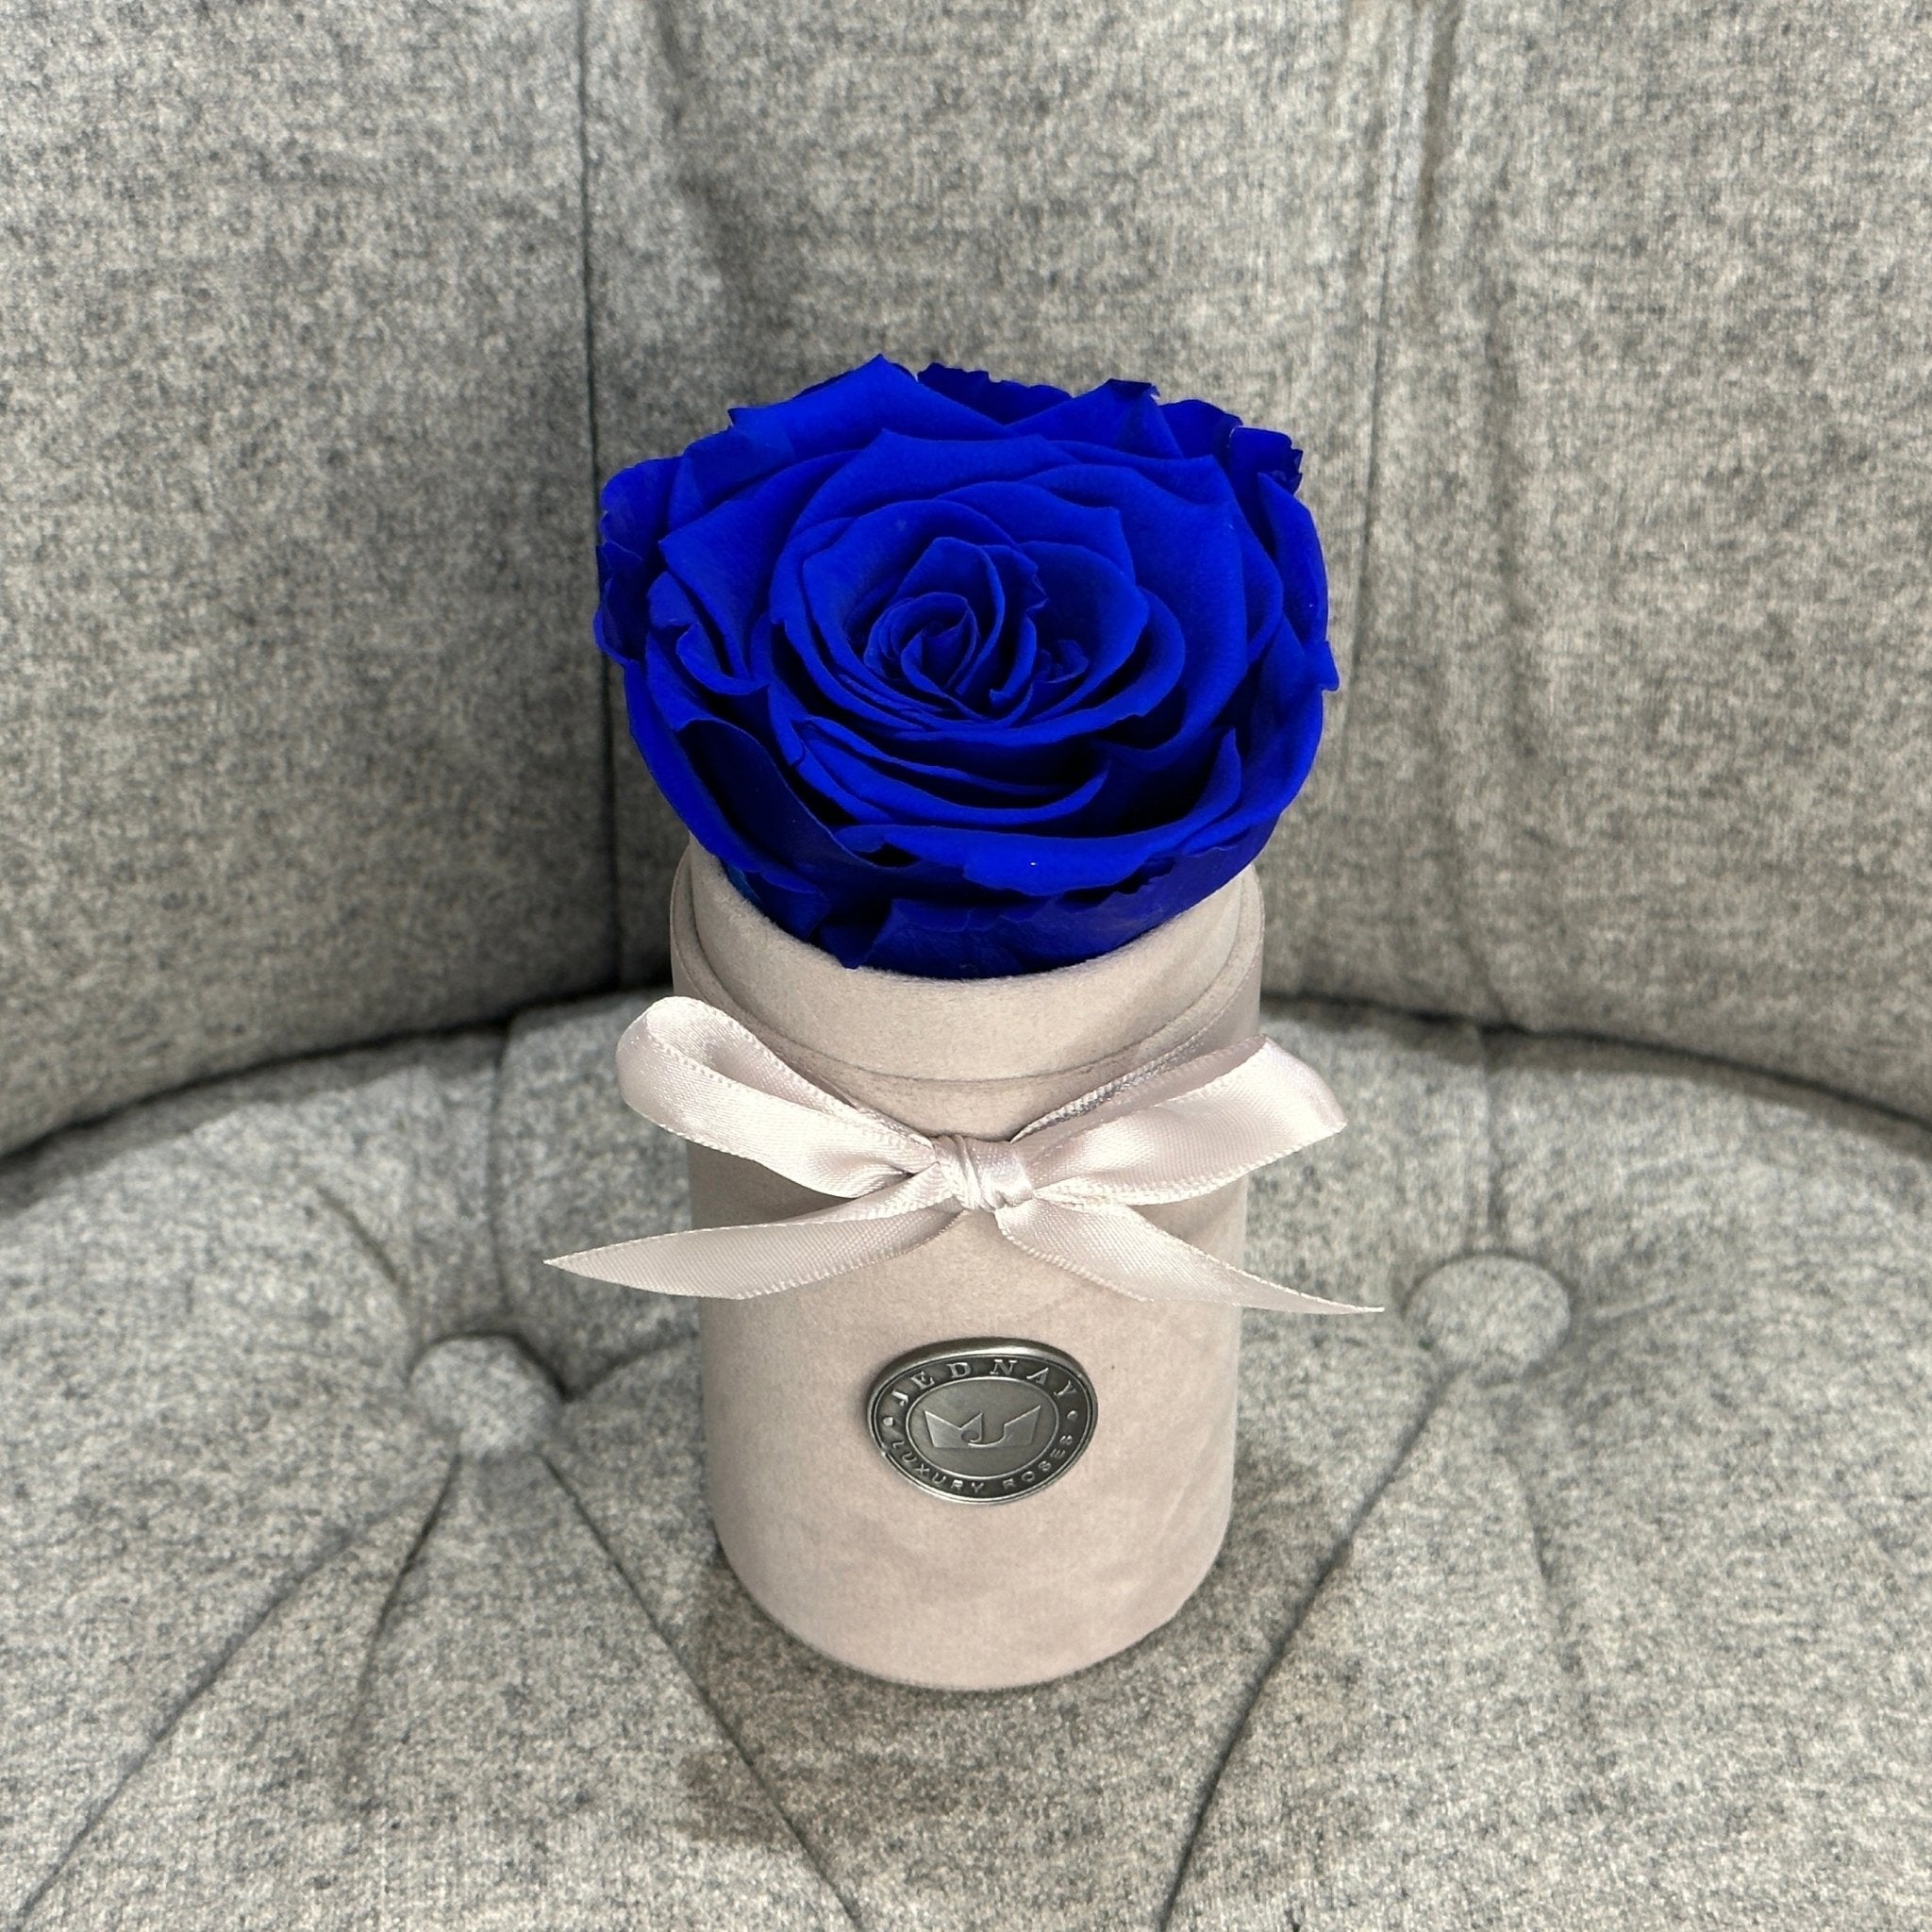 Single Grey Suede Forever Rose Box - Deep Blue Sea Eternal Rose - Jednay Roses